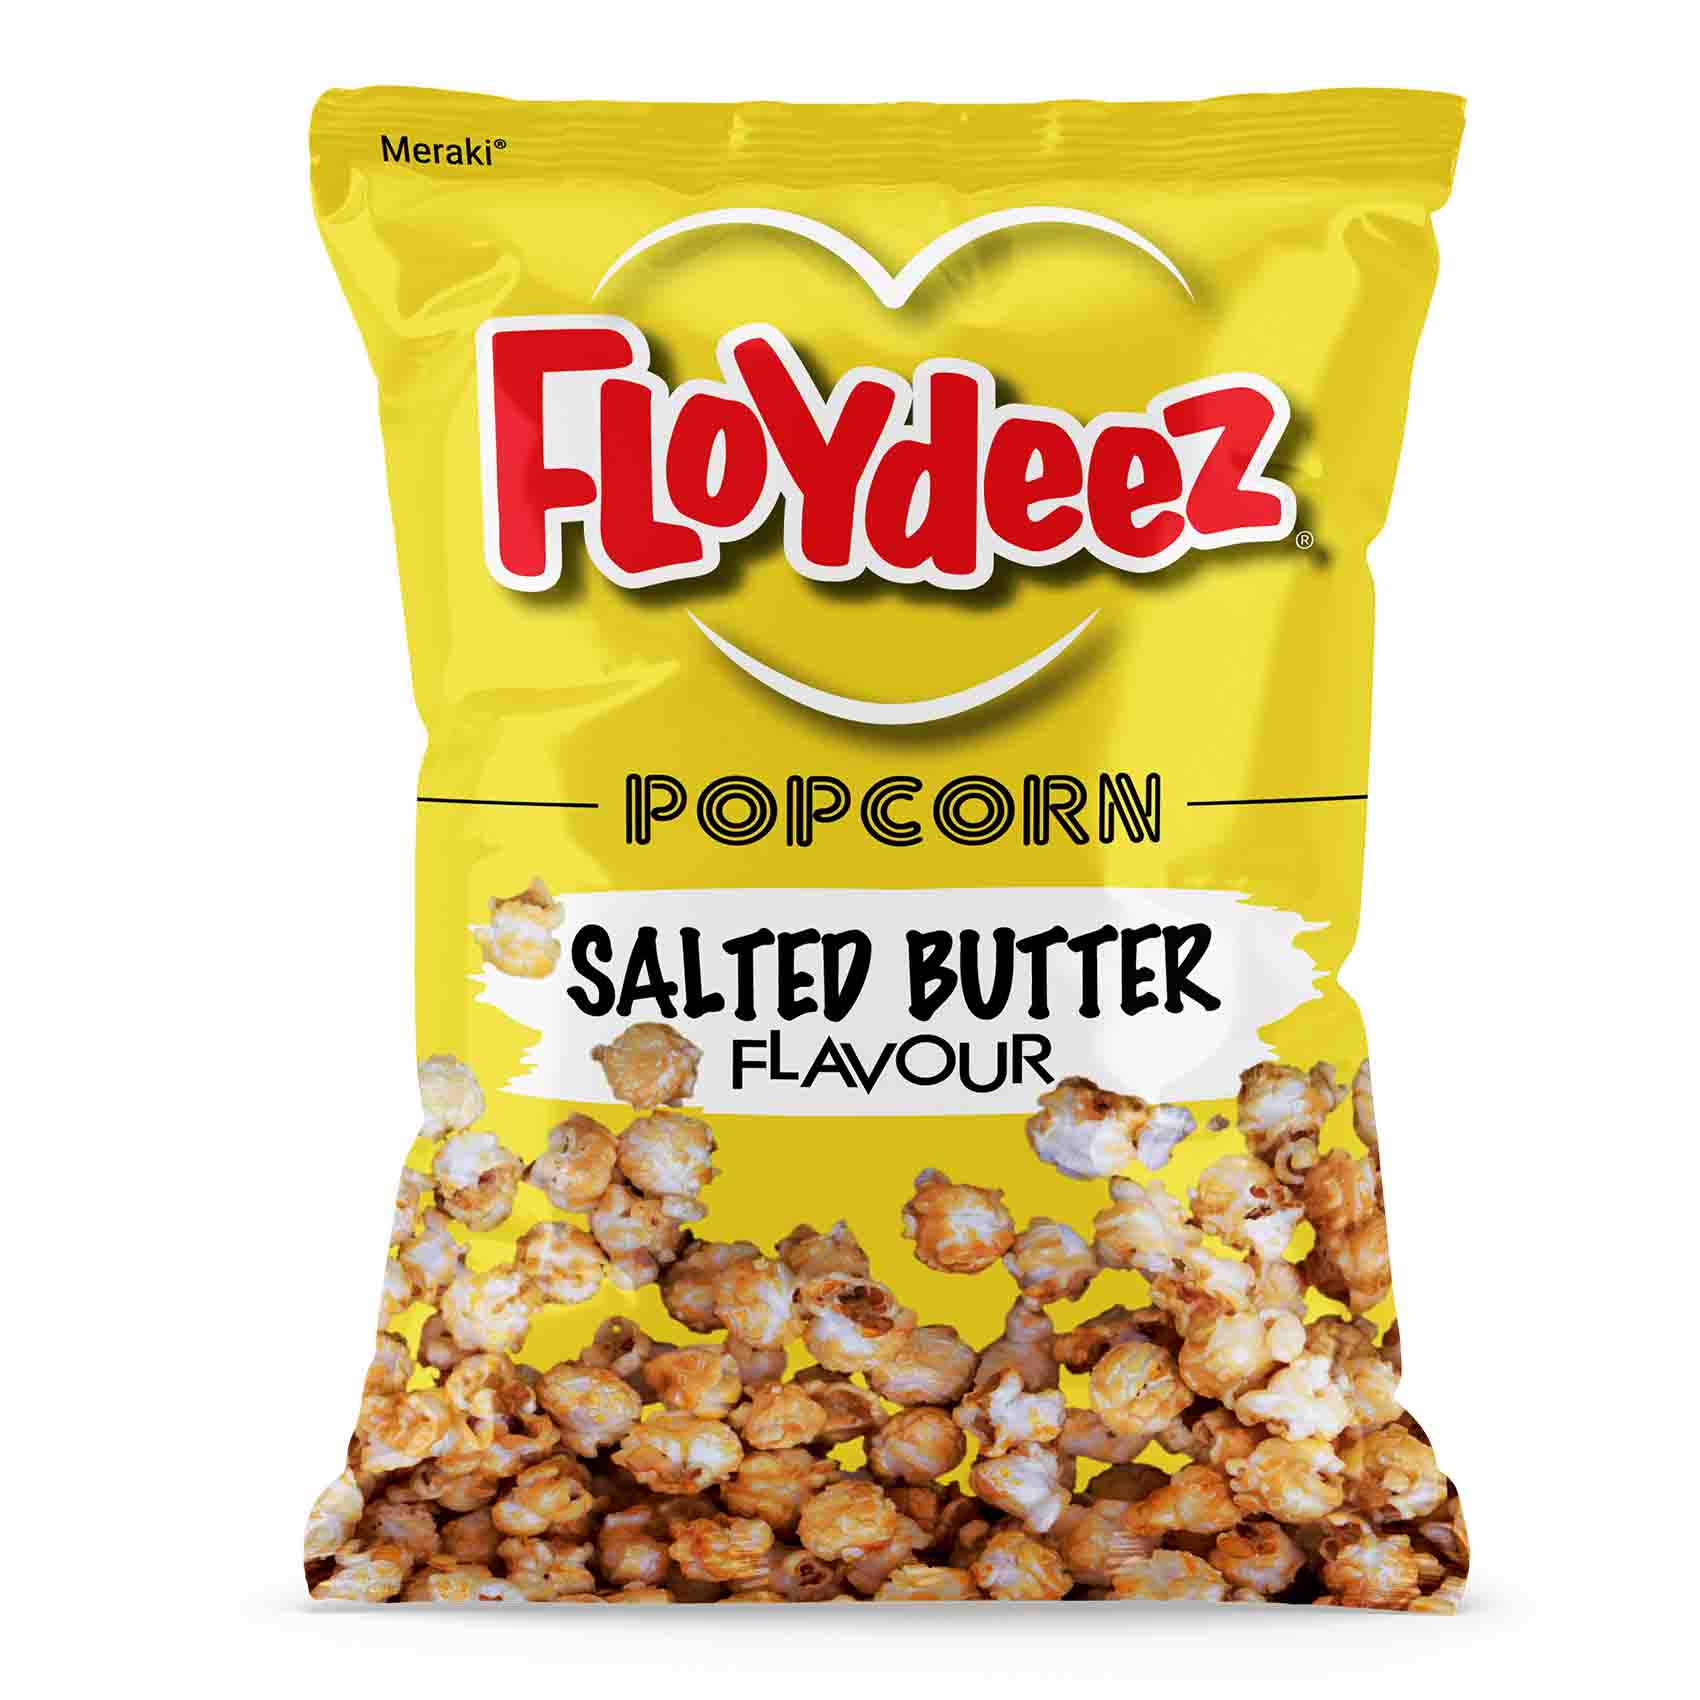 Floydeez popcorn Caramel 30g